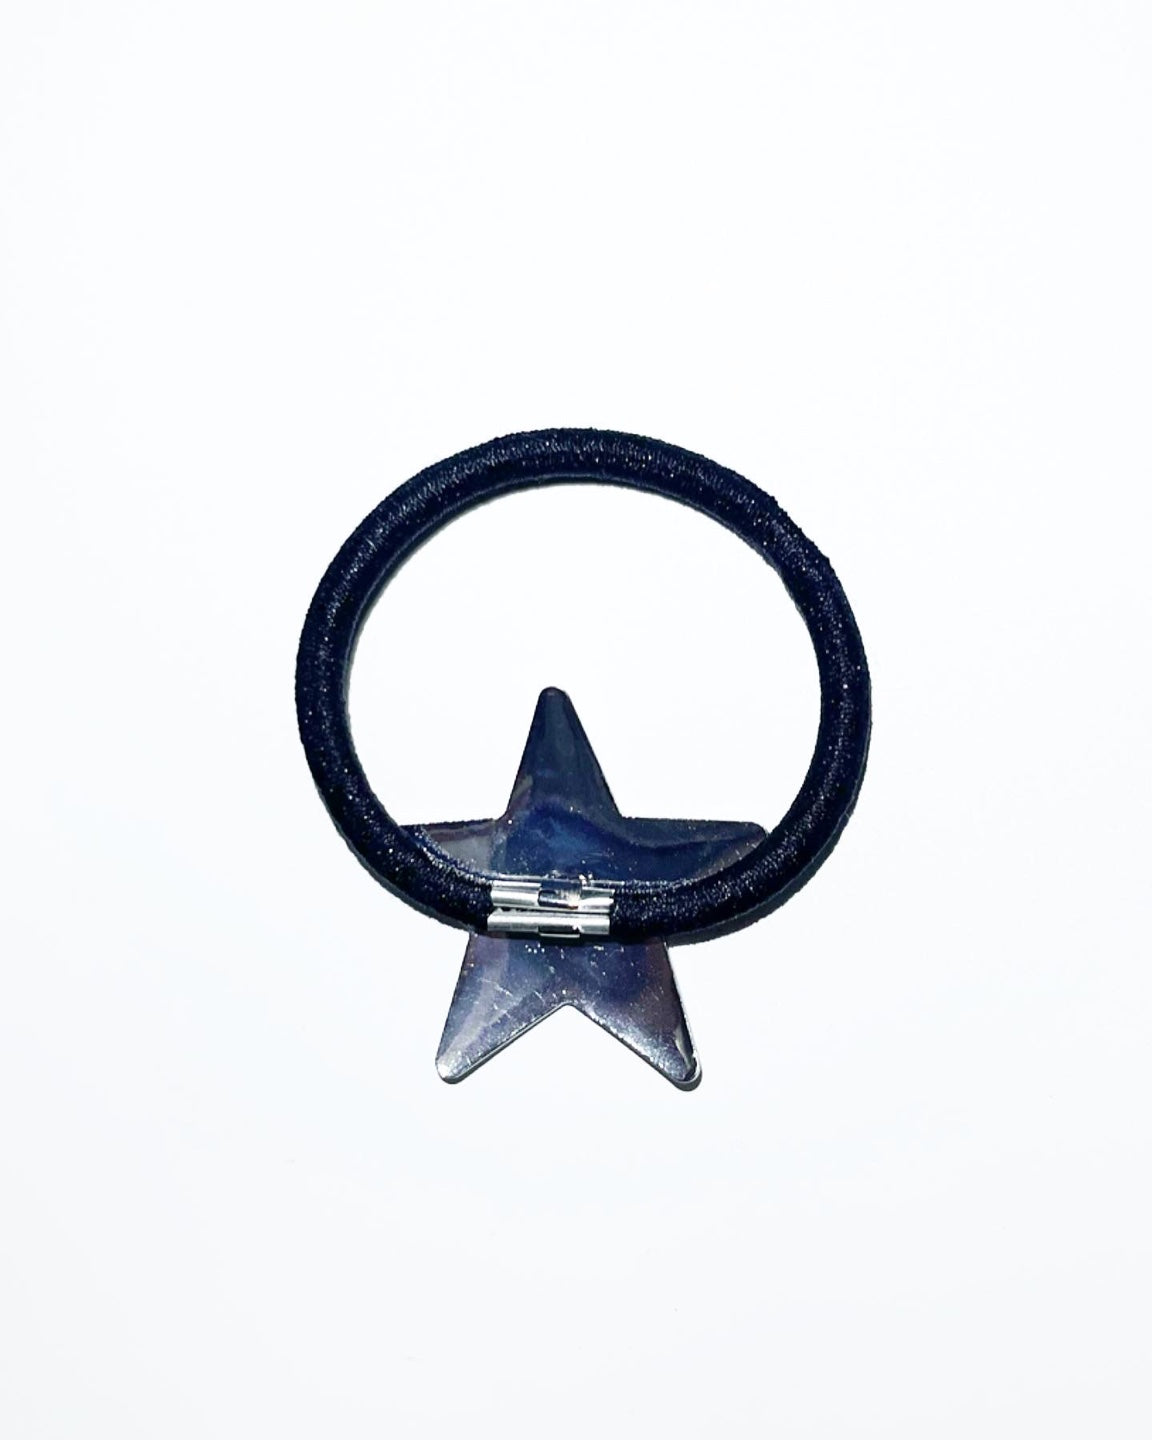 Silver big star rubber band